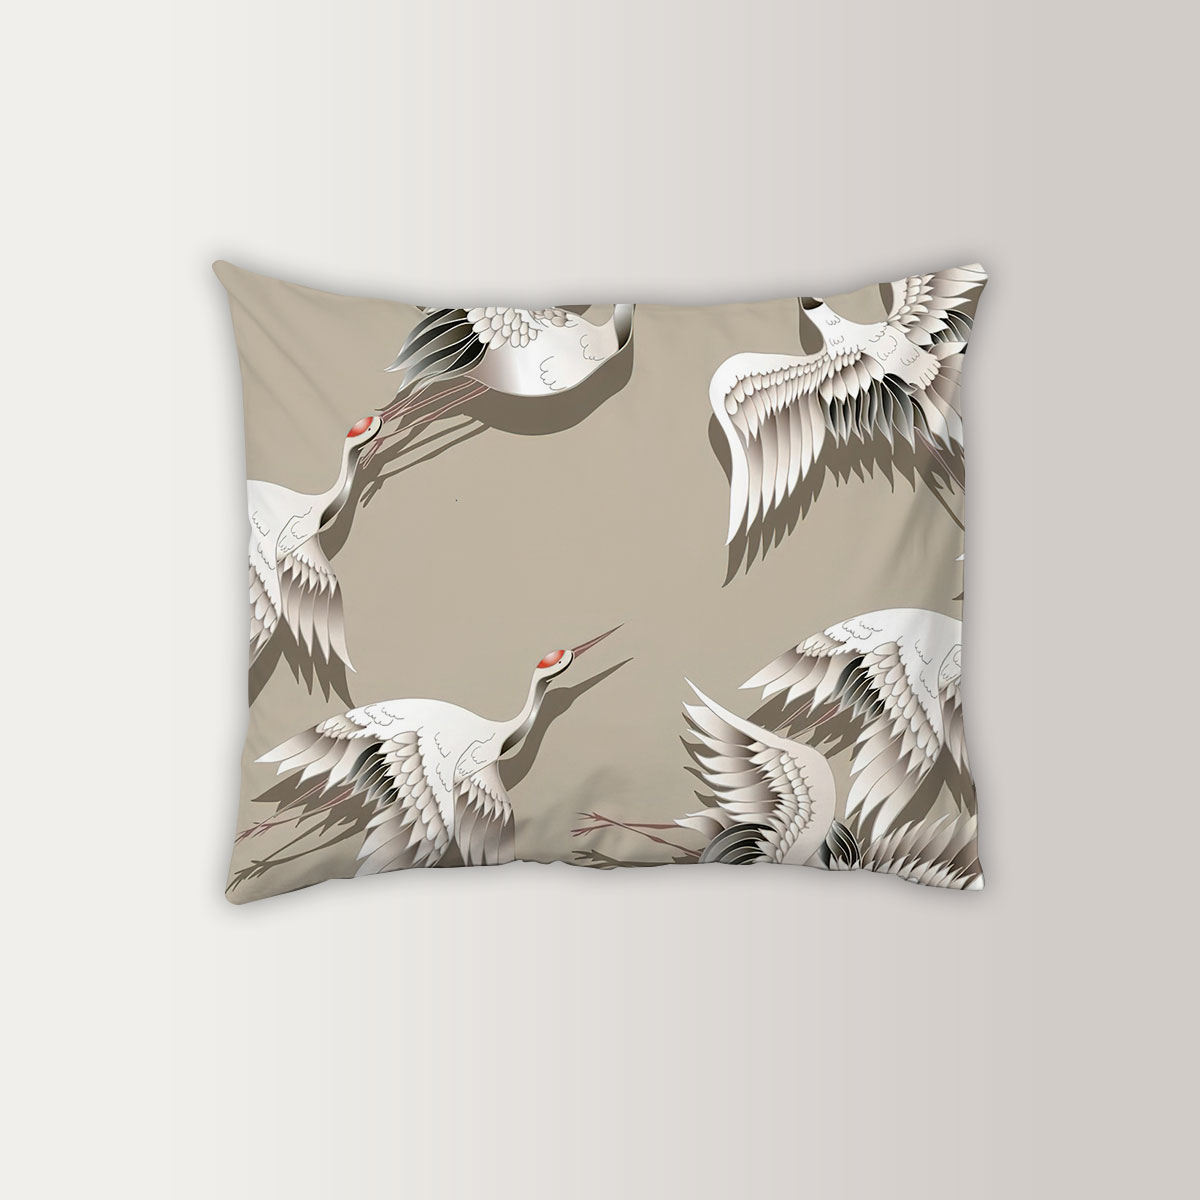 Japanese Heron Brown Backgorund Pillow Case